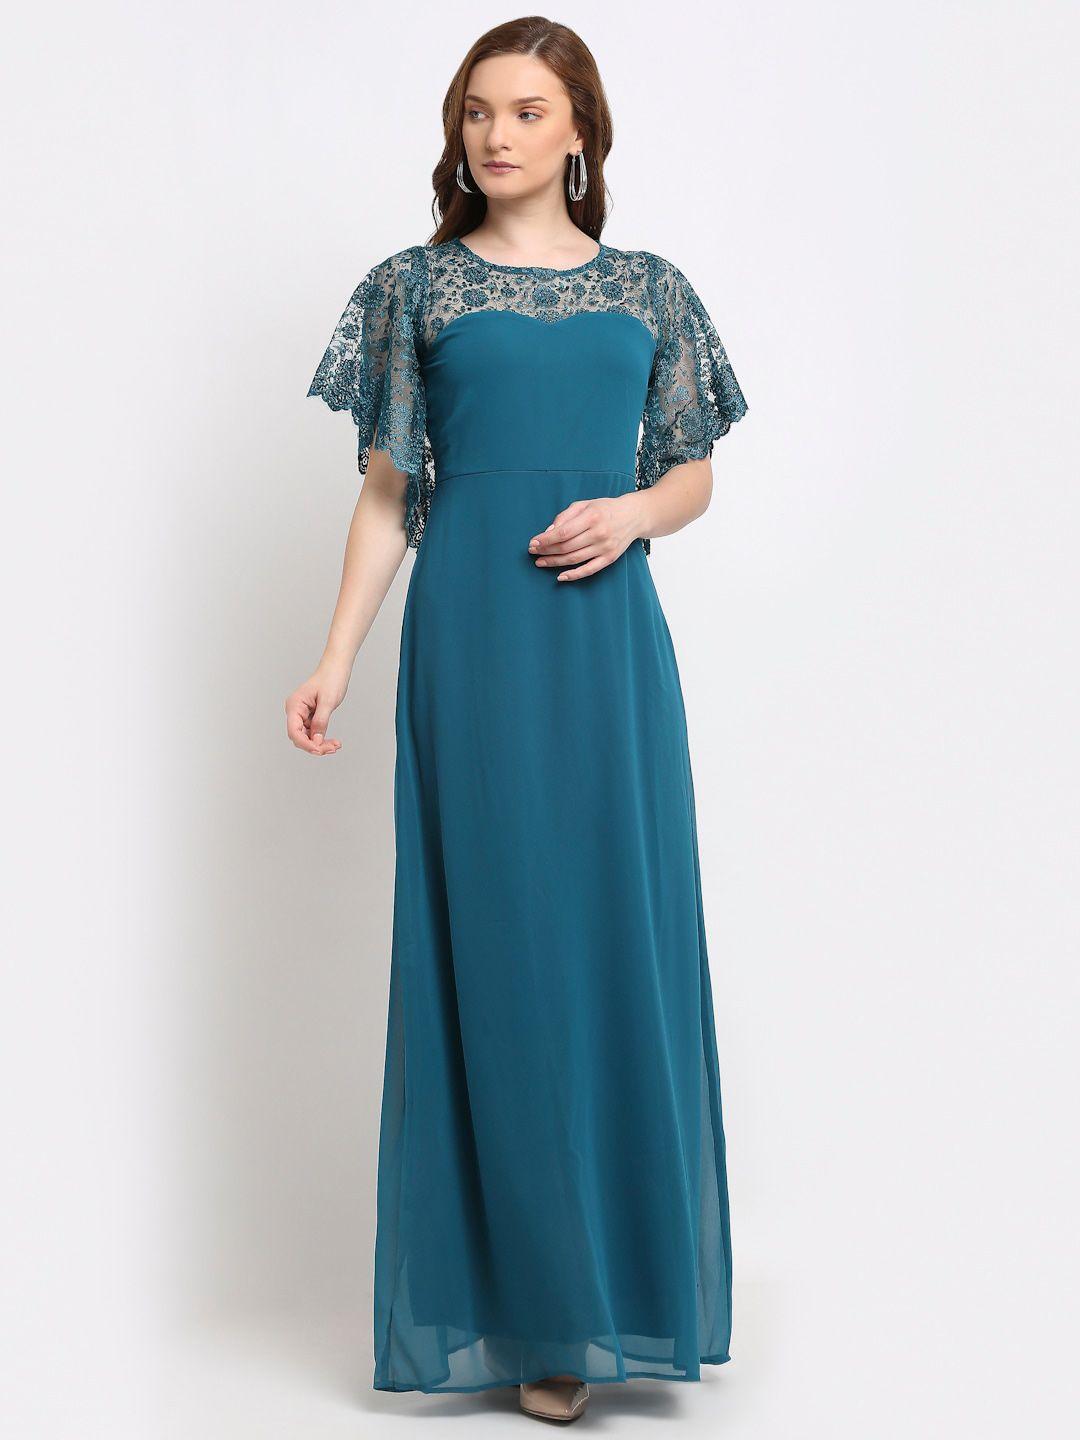 la zoire woman turquoise blue embellished georgette maxi dress